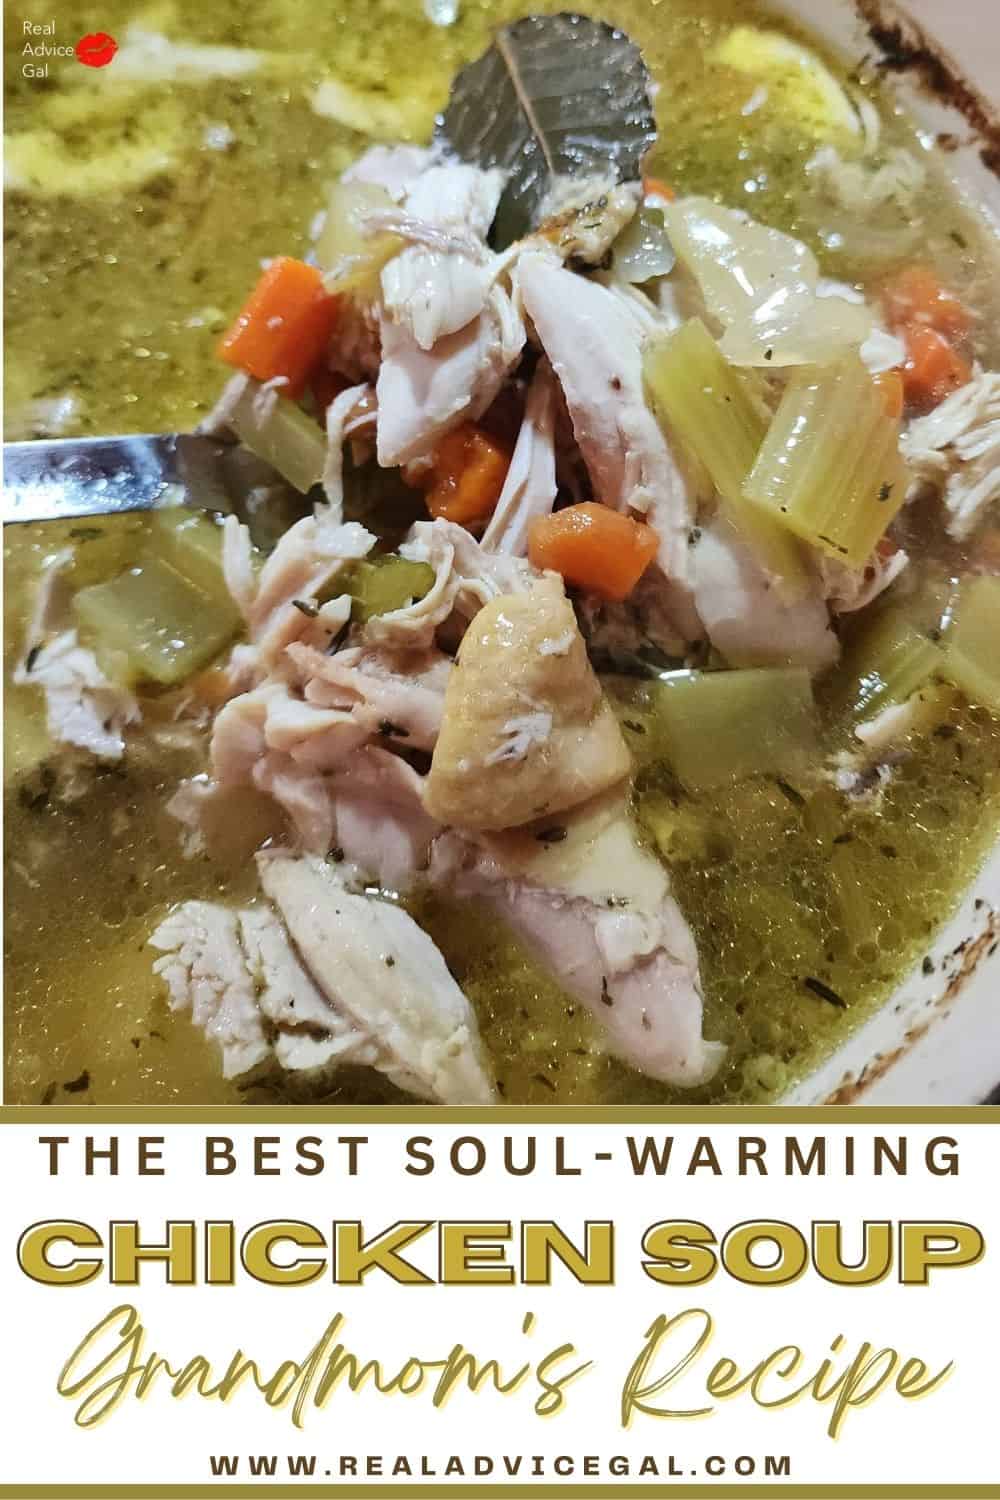 Grandmom's Chicken Soup Recipe